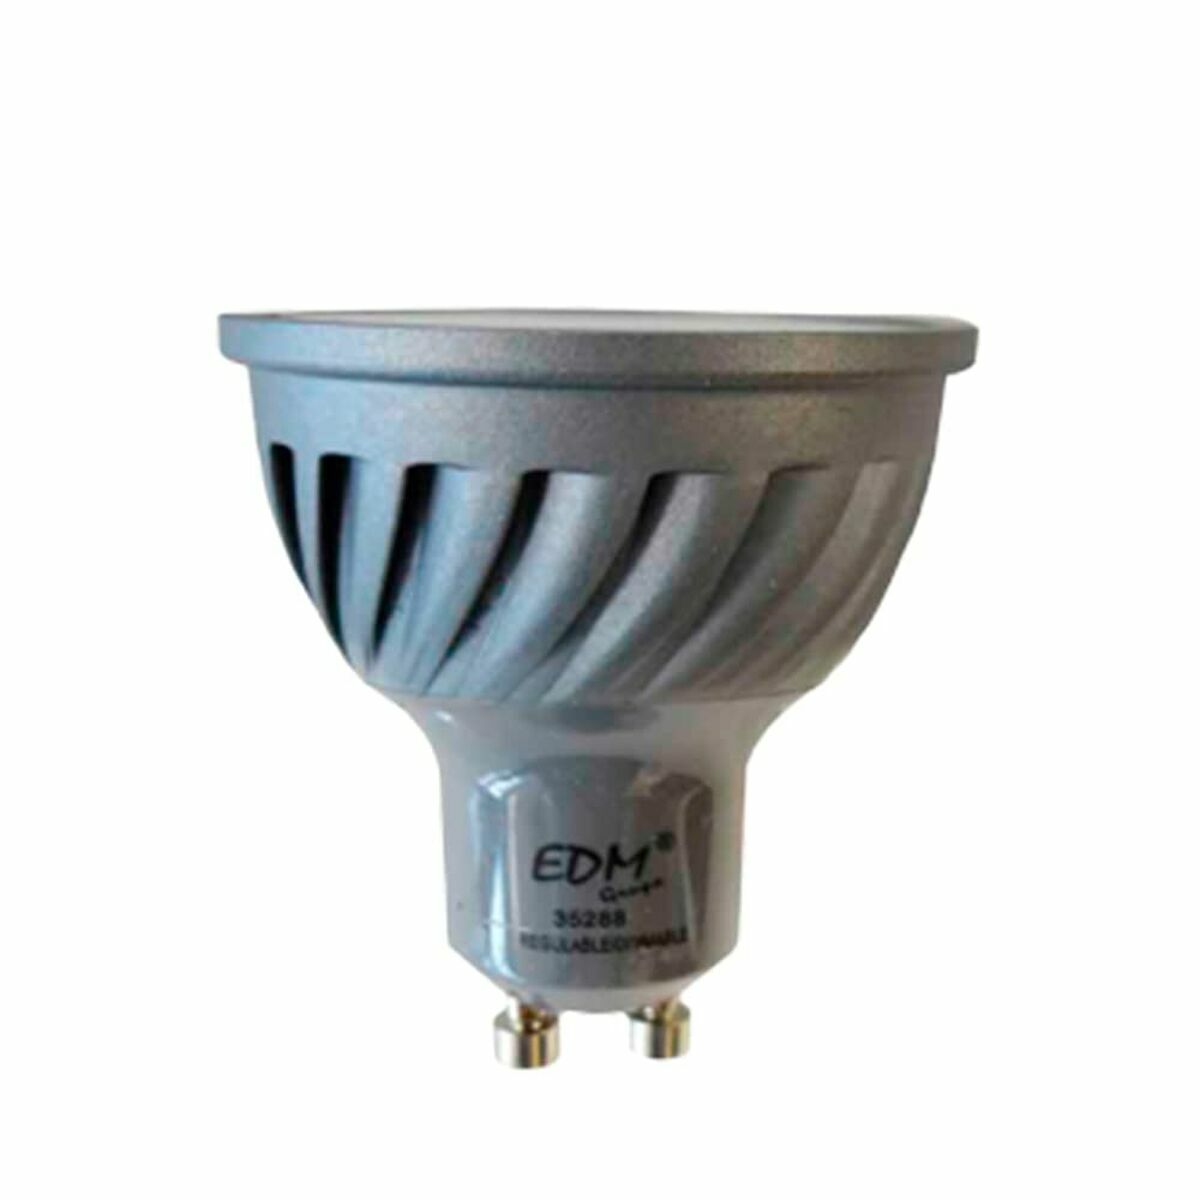 Lampe LED EDM 35289 6 W 3200K 480 Lm GU10 G